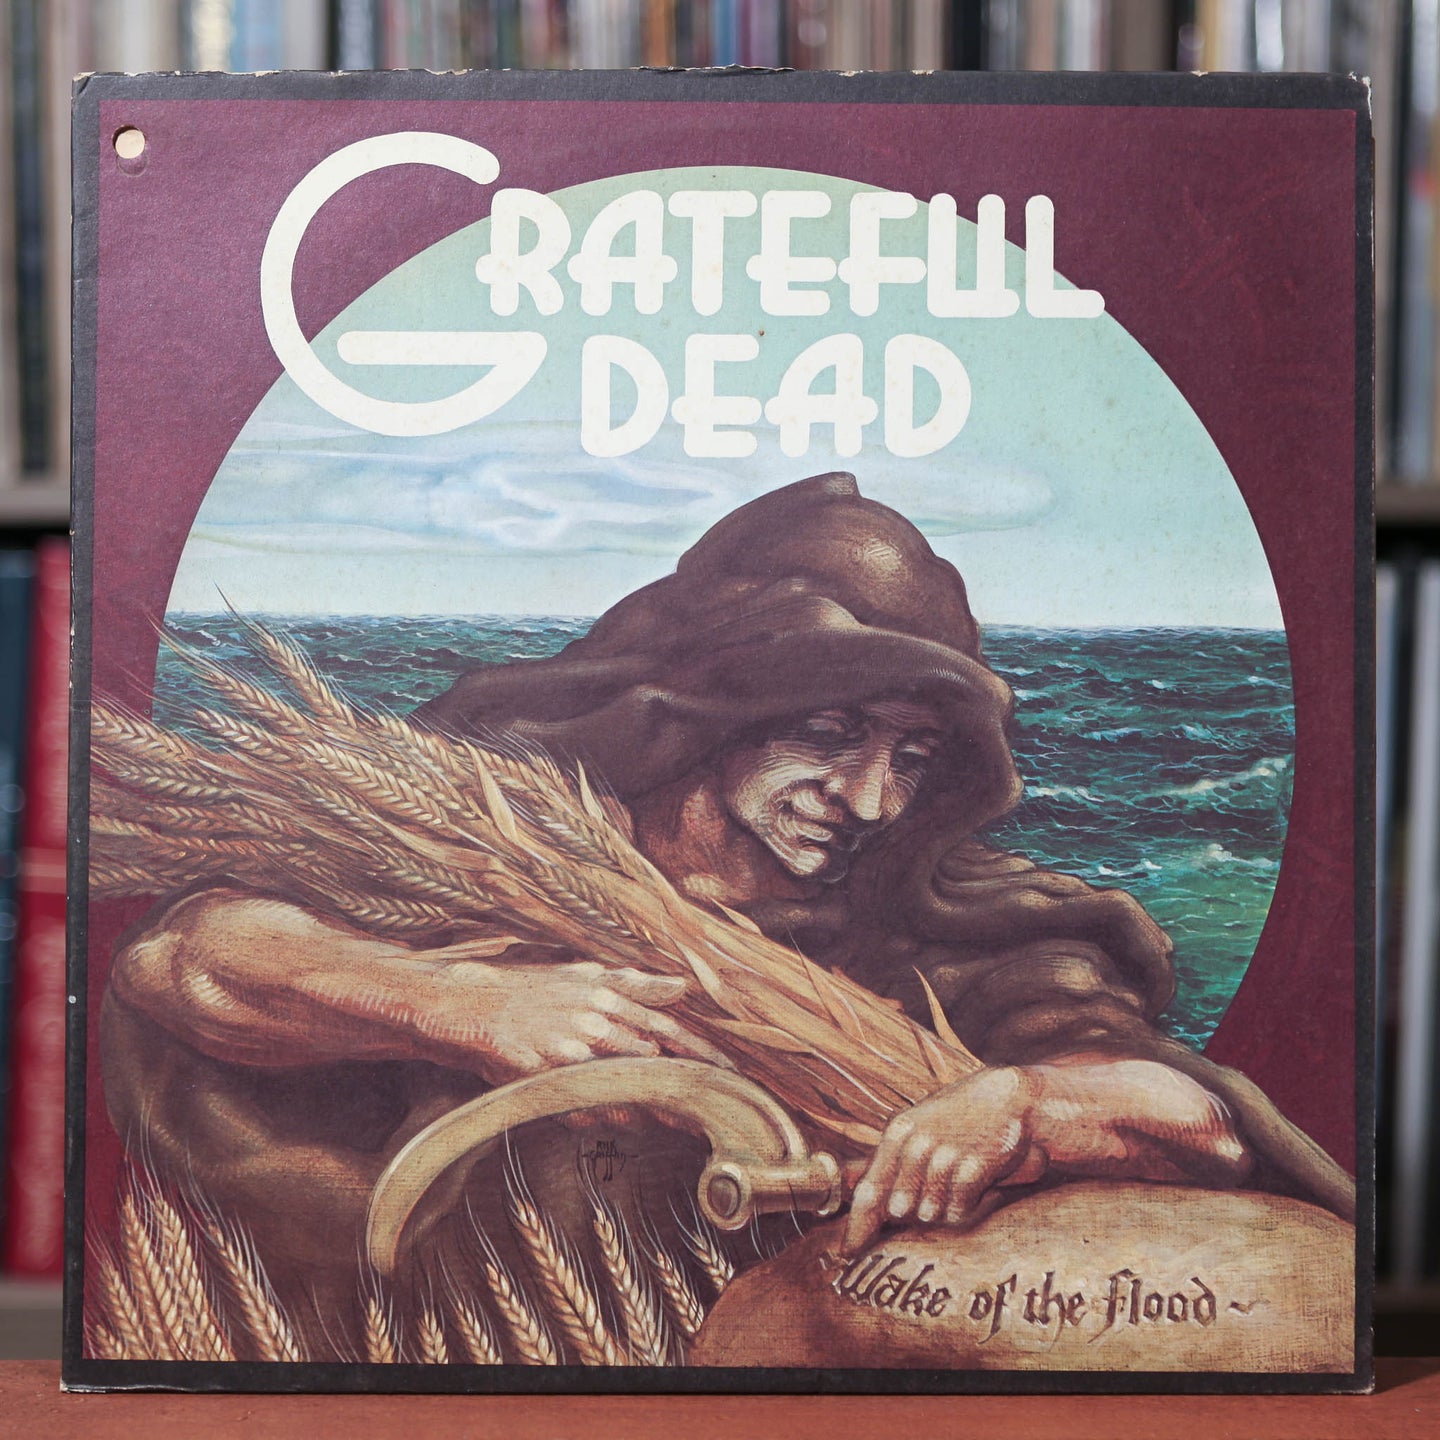 Grateful Dead - Wake Of The Flood - 1973 Grateful Dead Records, VG/VG+